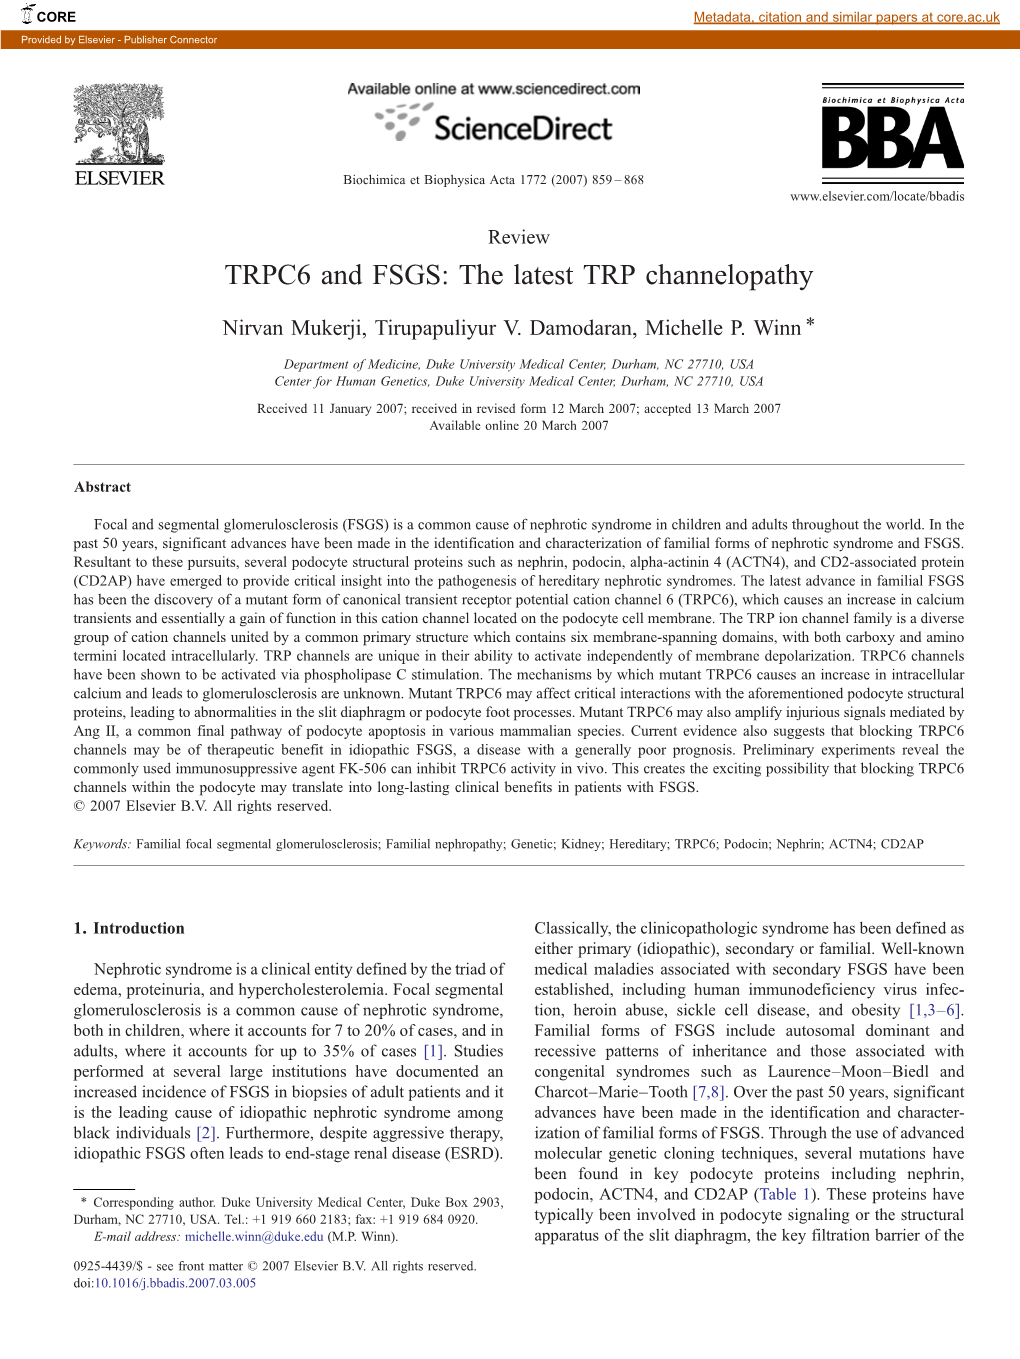 TRPC6 and FSGS: the Latest TRP Channelopathy ⁎ Nirvan Mukerji, Tirupapuliyur V